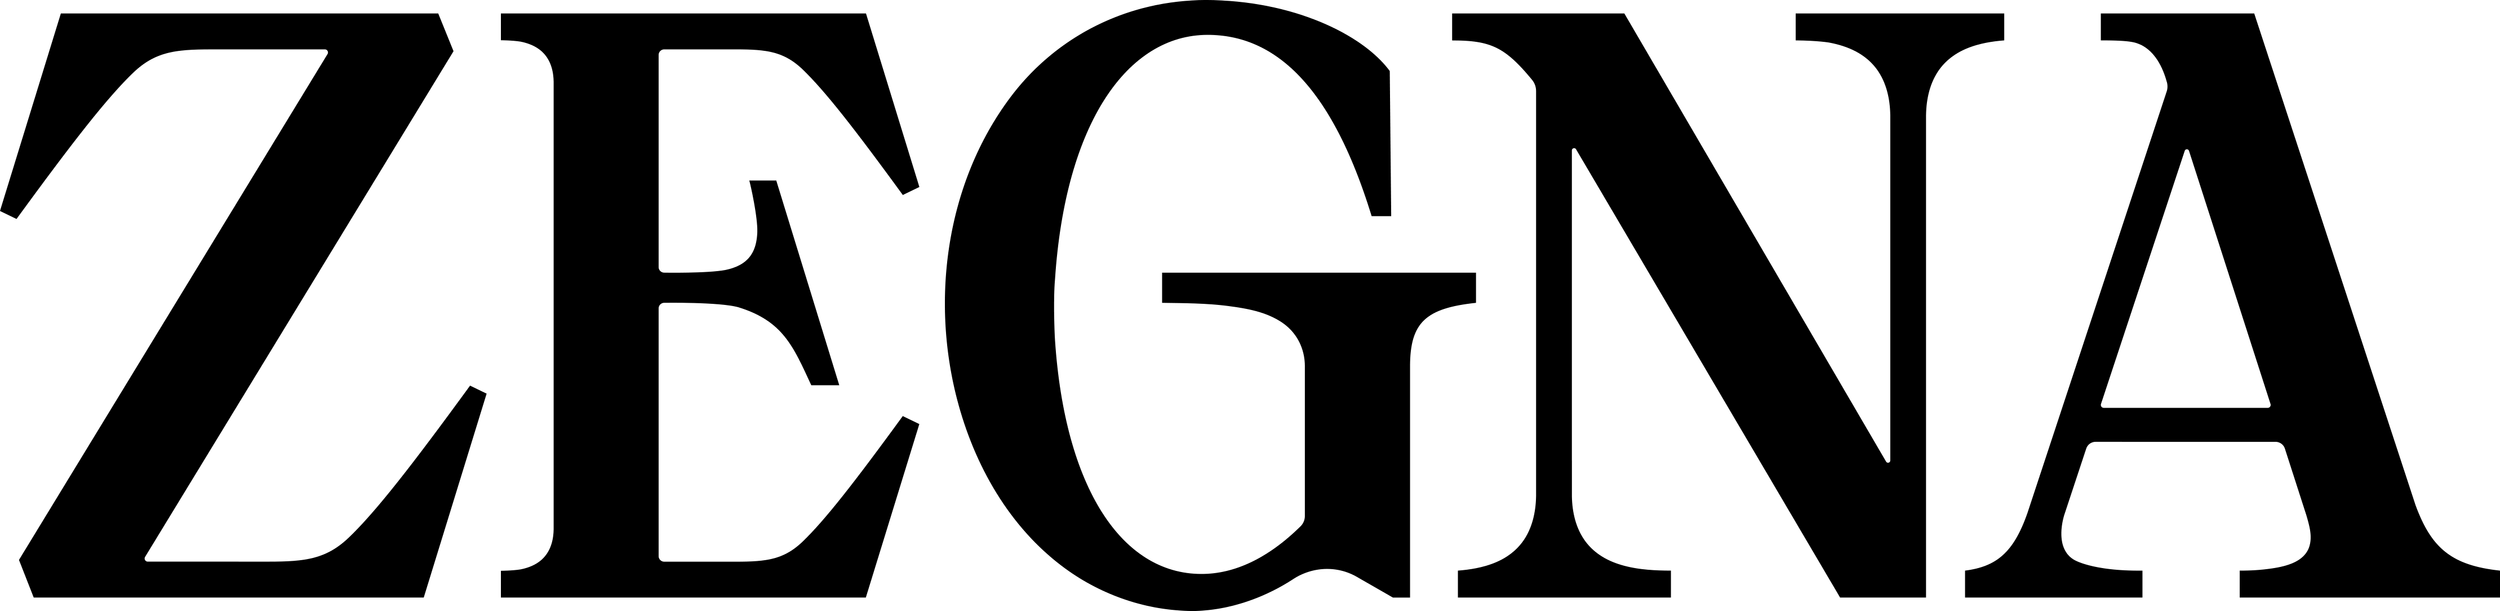 Zegna-Logotype-BLACK.png